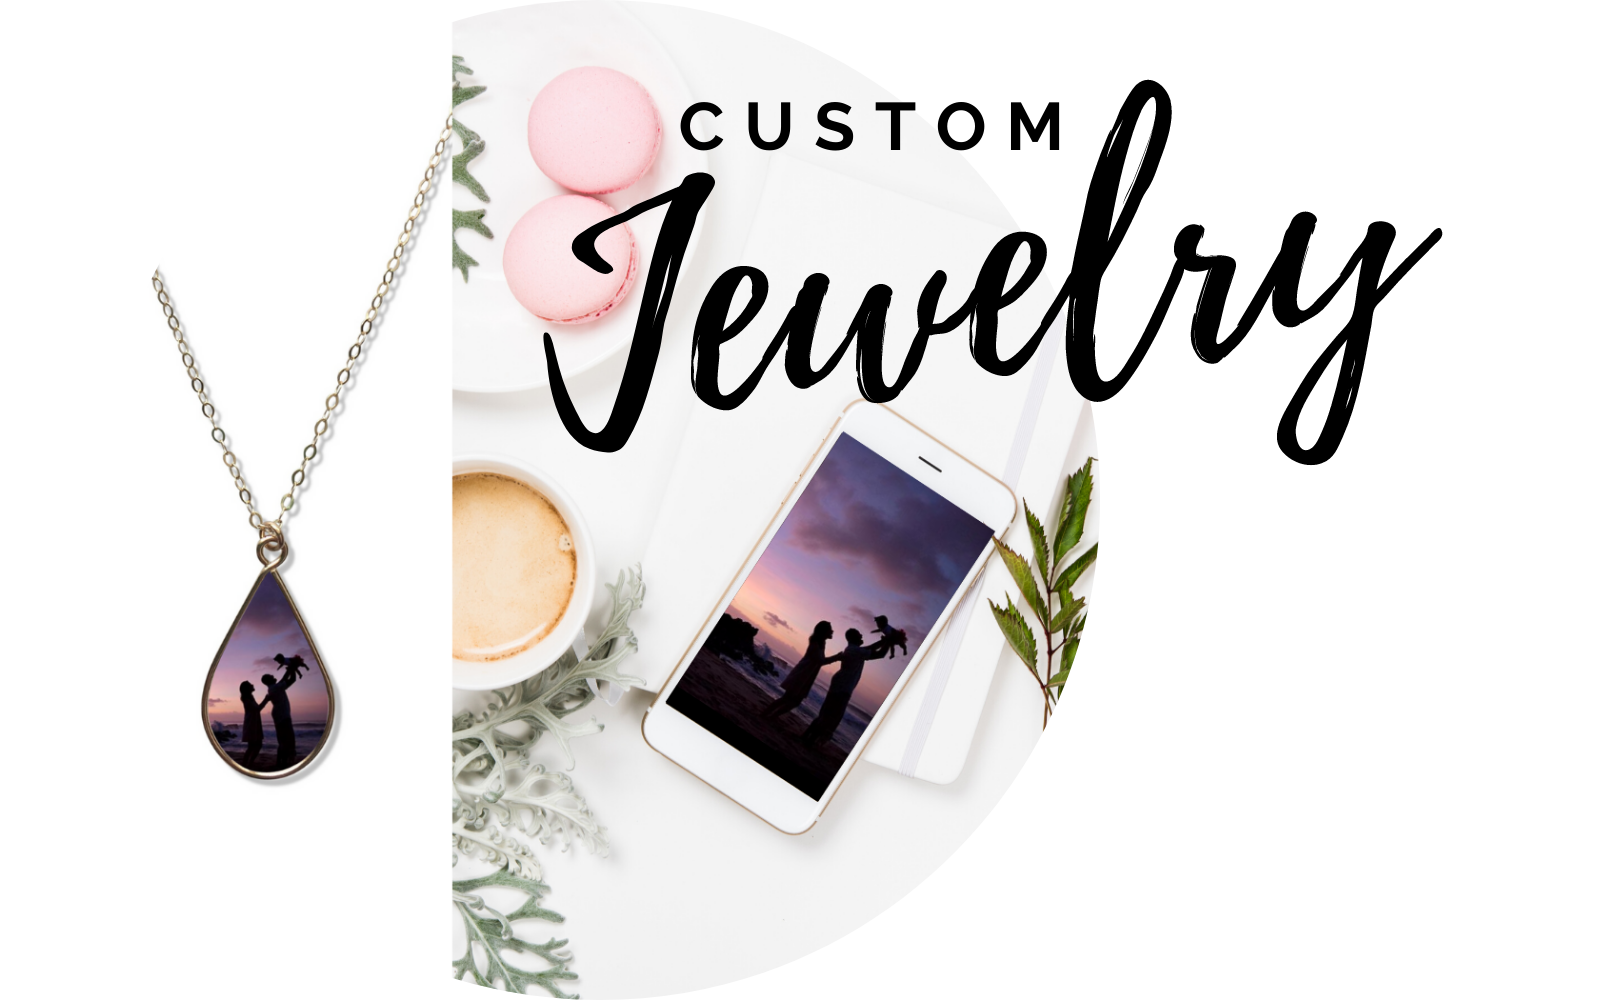 Make Your Own Custom Photo Jewelry With Foterra Jewelry!